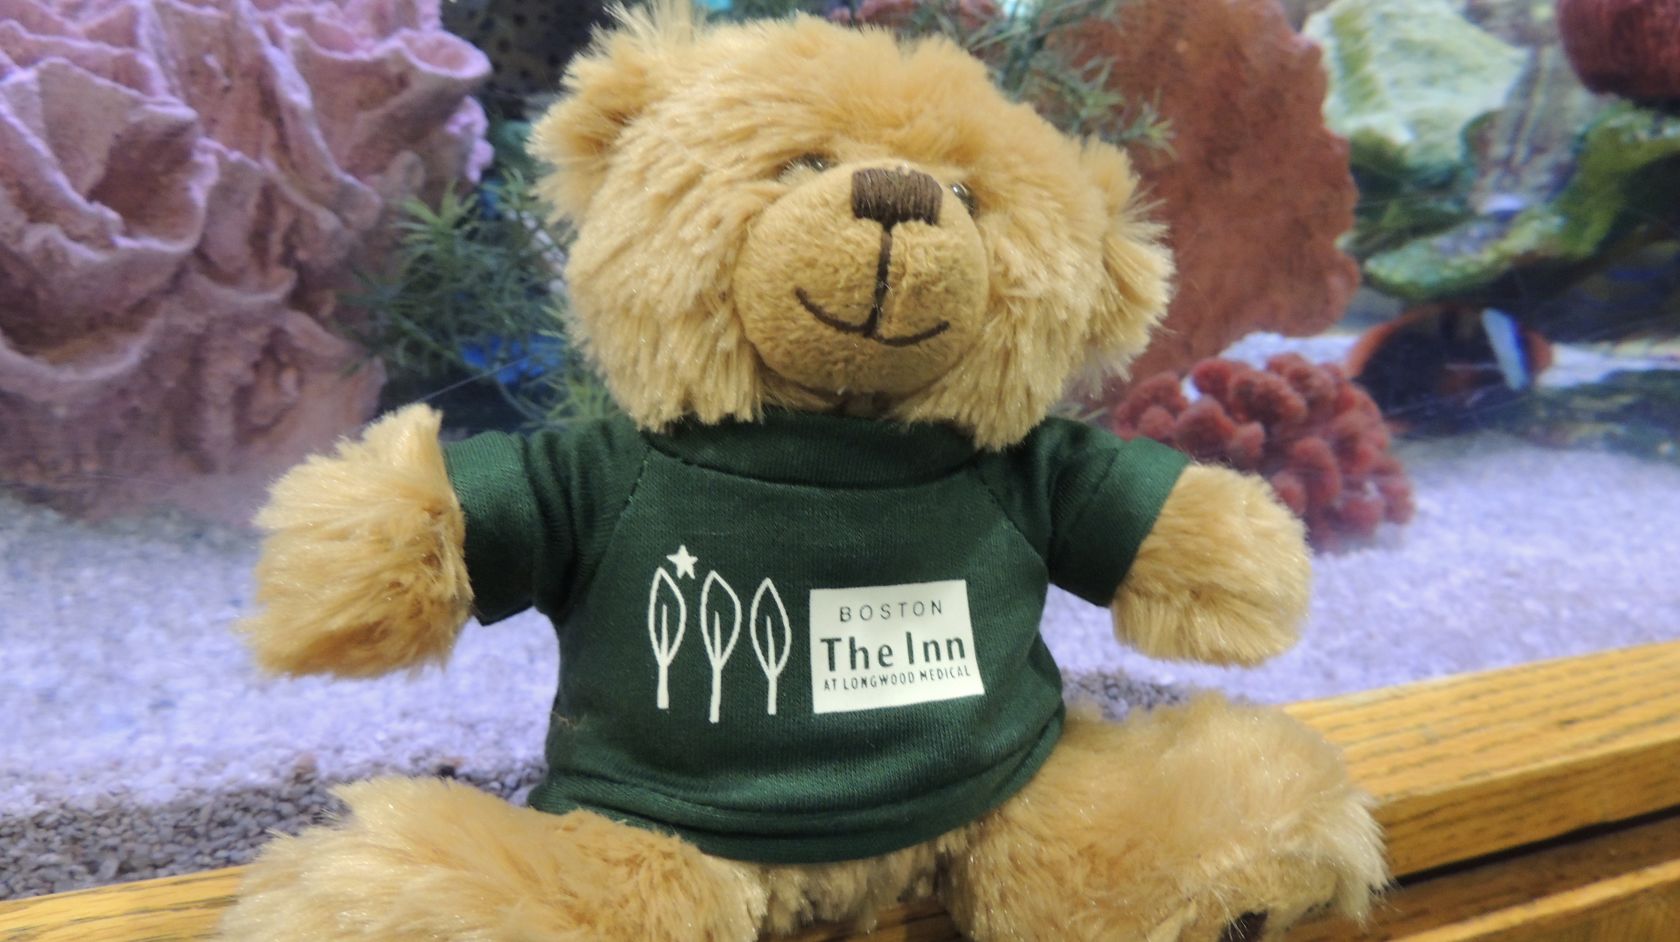 Hope the bear with Inn at Longwood medical shirt on